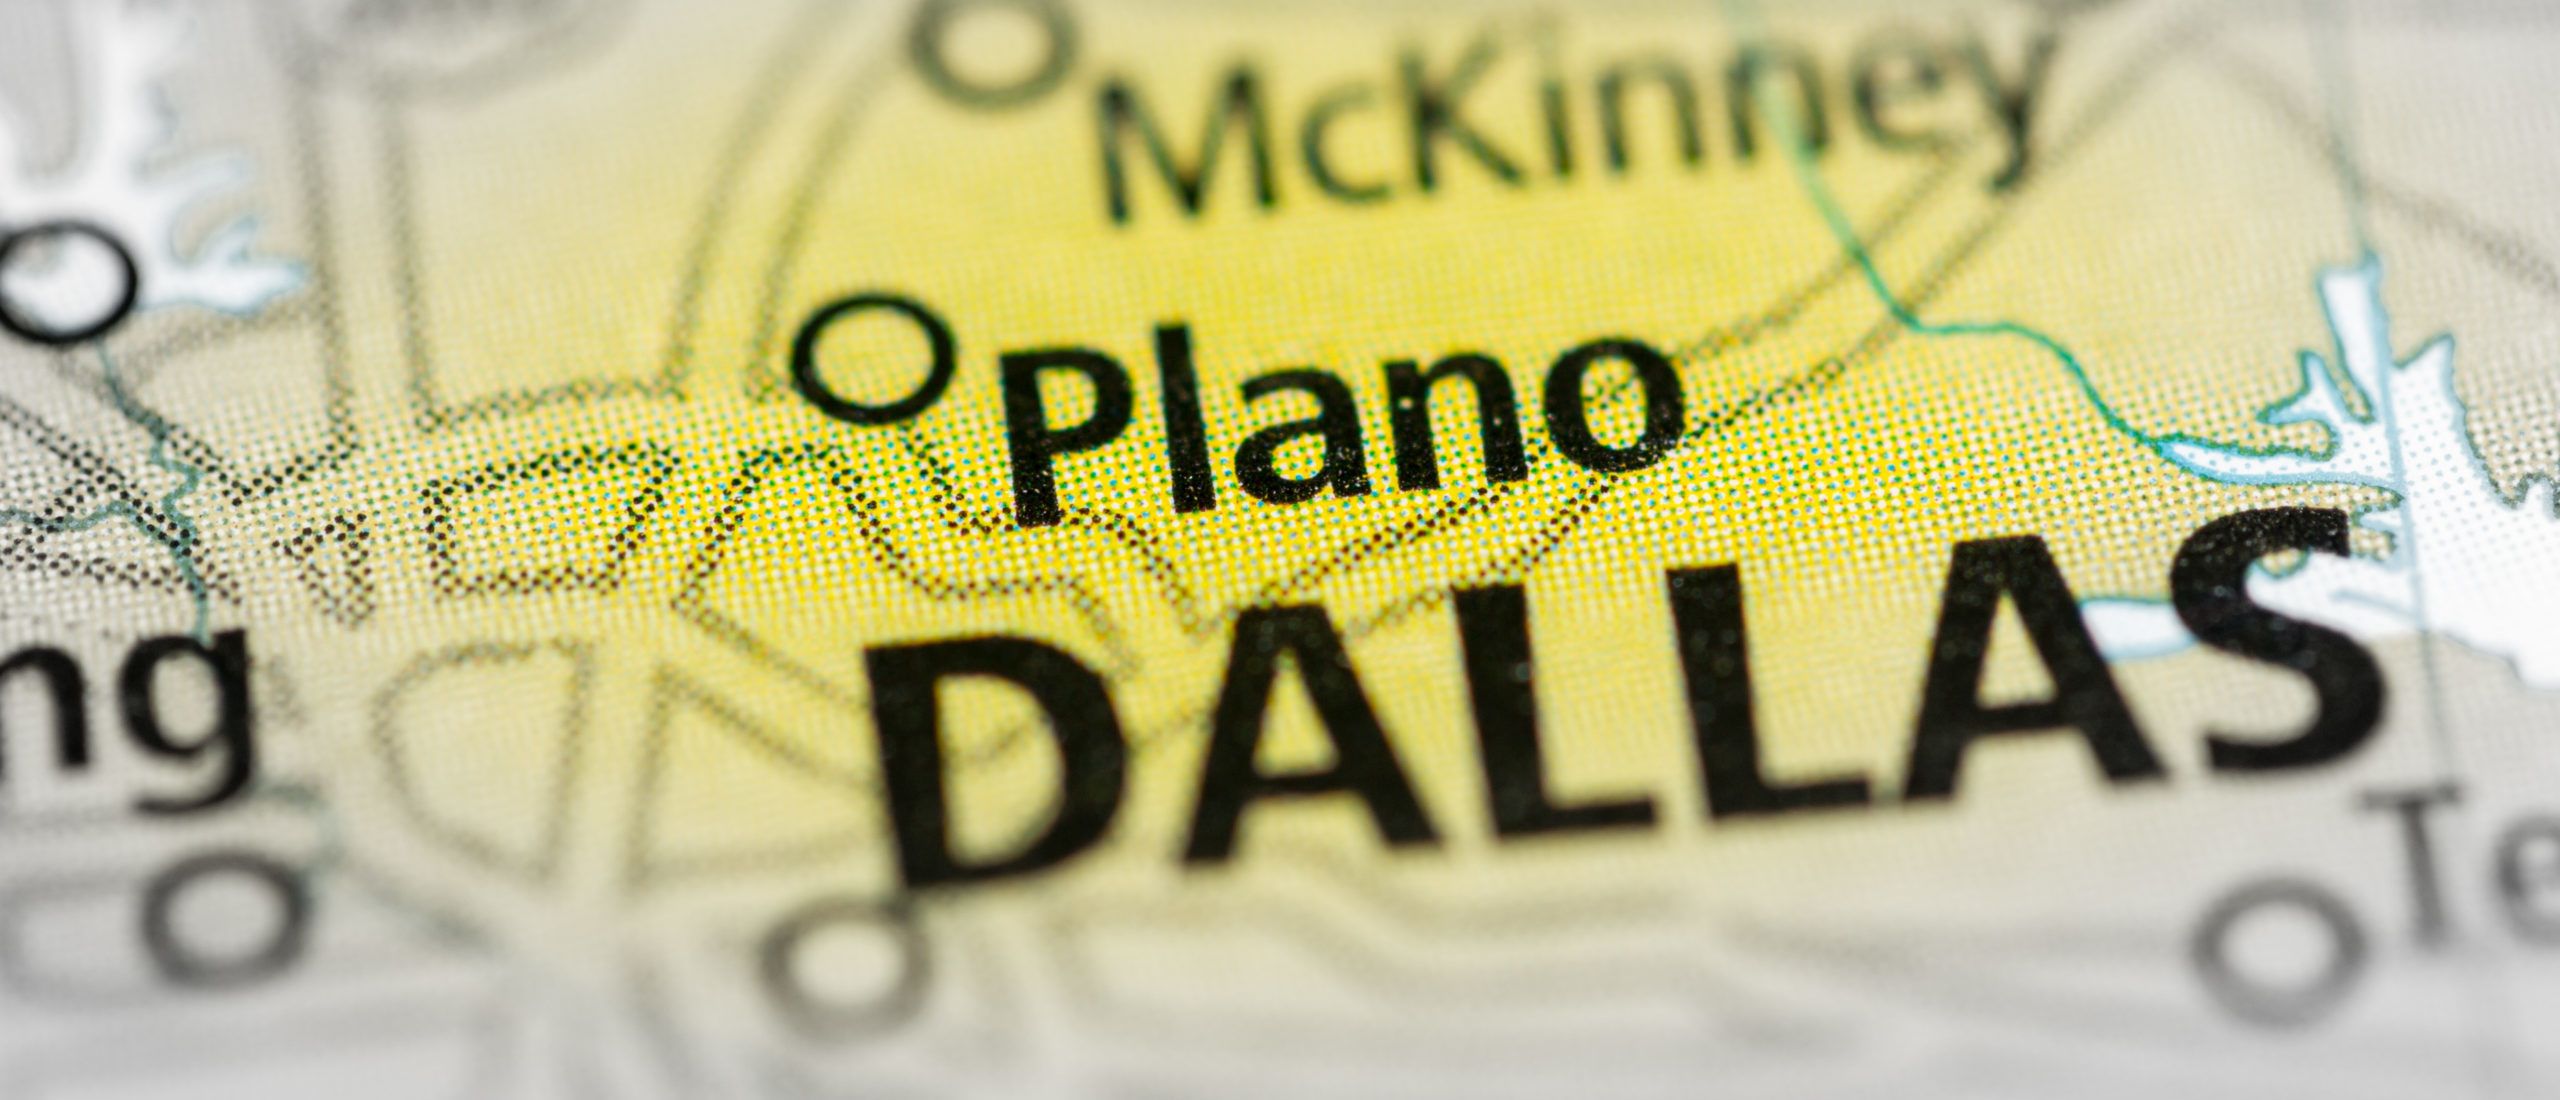 Plano, Texas by SevenMaps. Shutterstock.